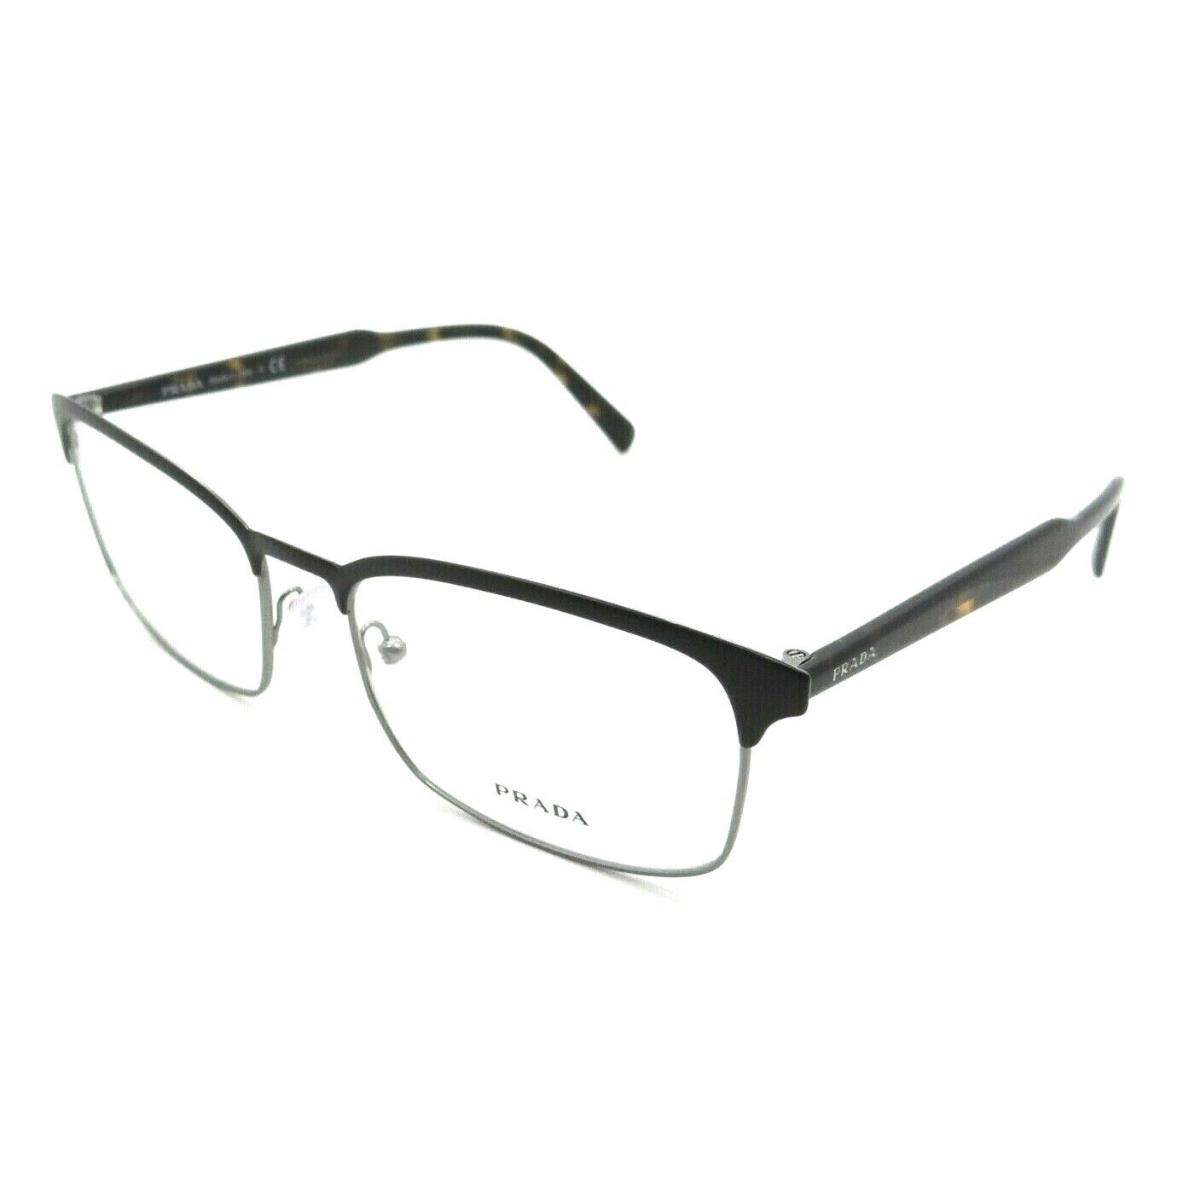 Prada Eyeglasses Frames PR 54WV 03G-1O1 56-18-150 Brown / Gunmetal Made in Italy